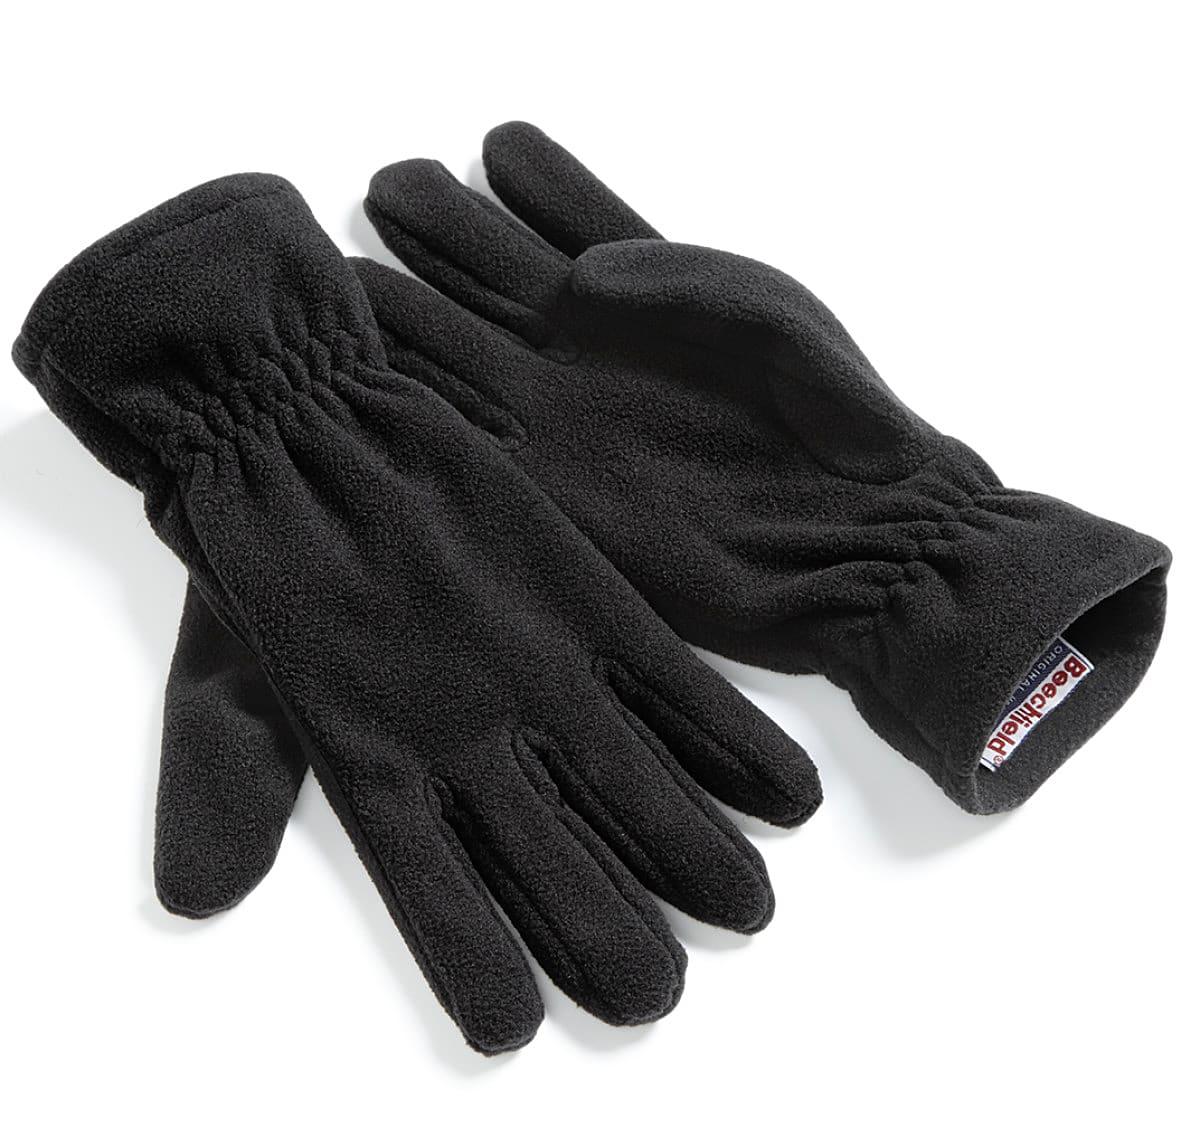 Beechfield Suprafllece Alpine Gloves in Black (Product Code: B296)